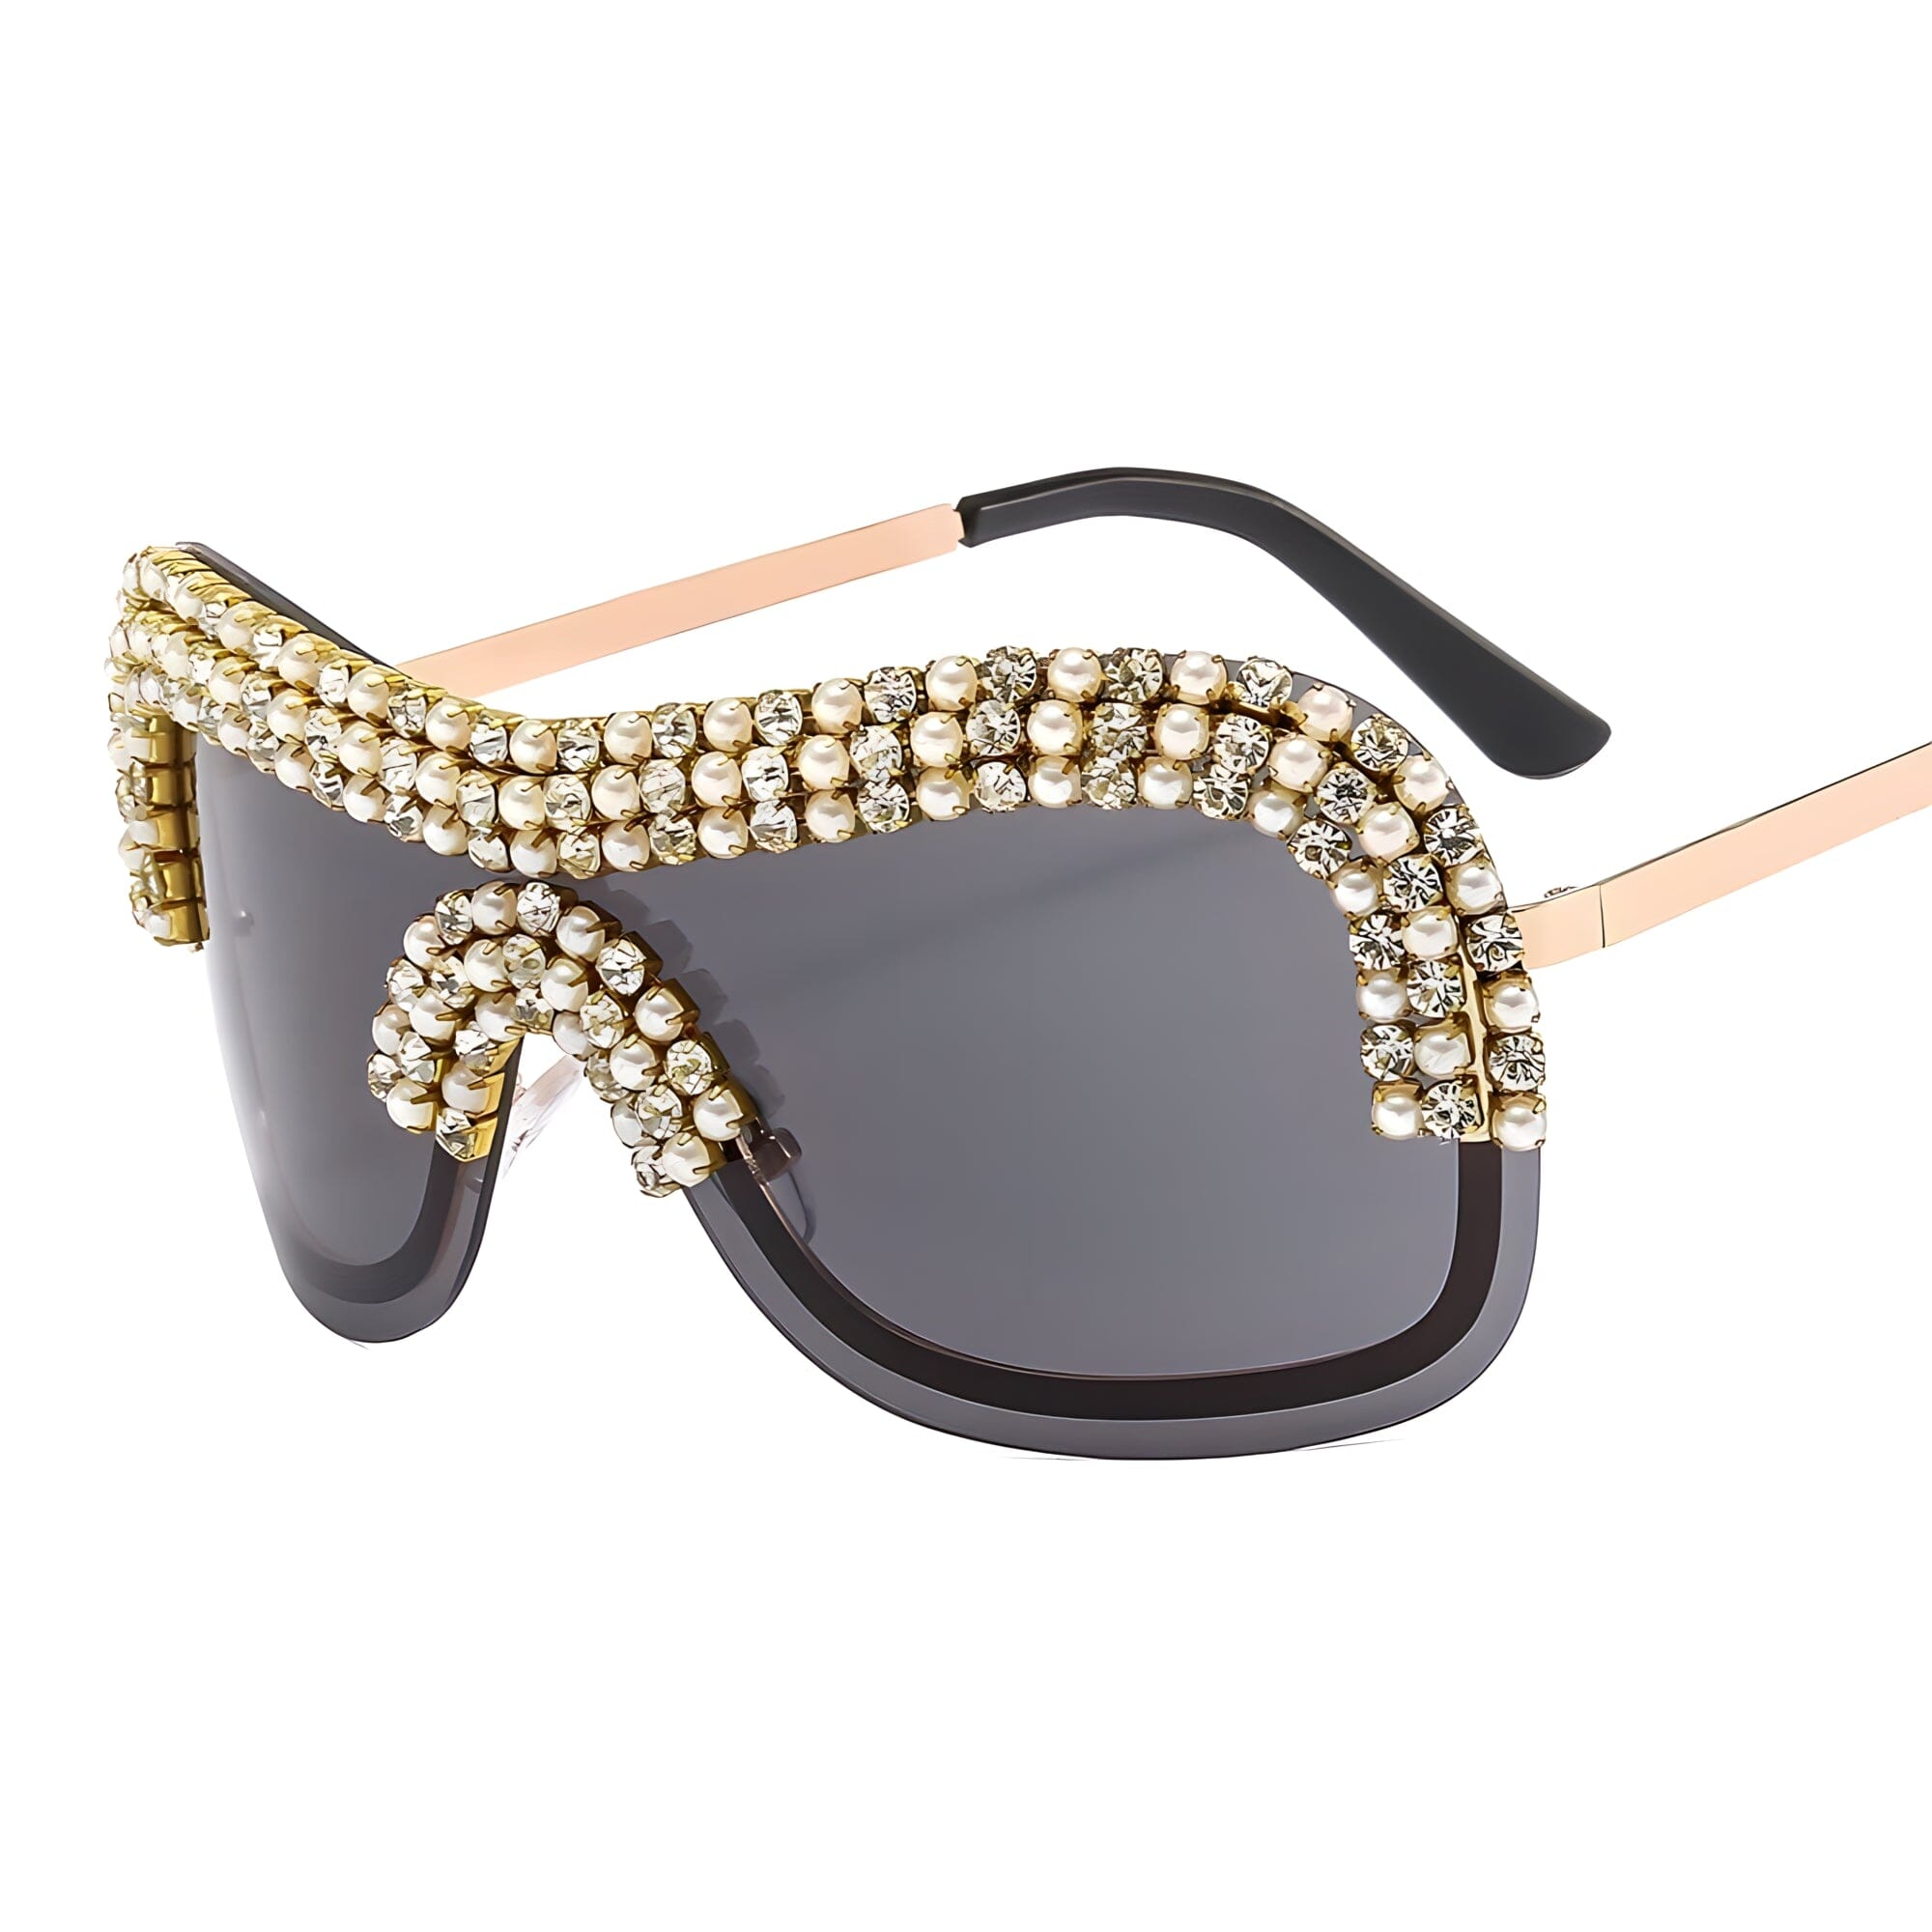 The Hollywood Rhinestone Sunglasses - Multiple Colors 0 SA Styles Black 